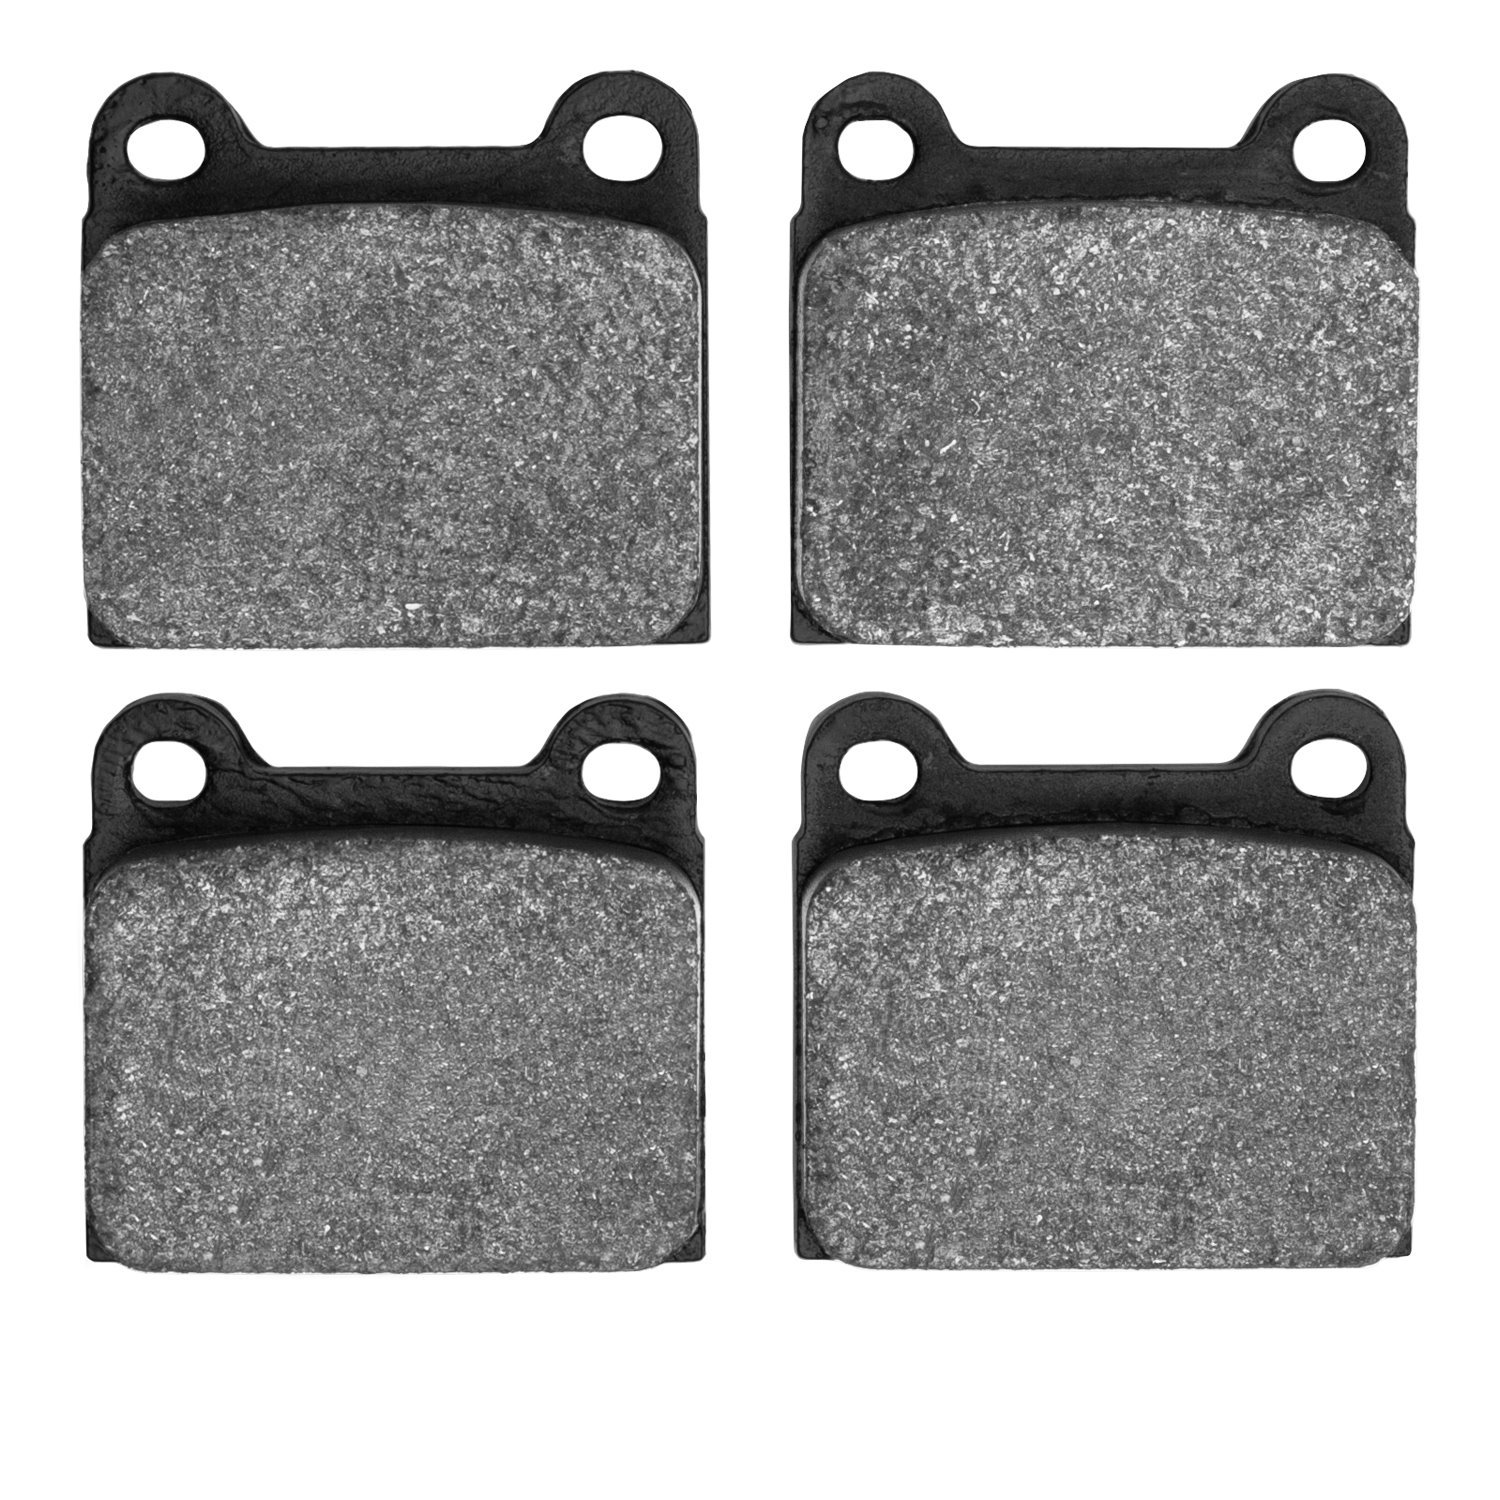 1310-0031-00 3000-Series Ceramic Brake Pads, 1961-2004 Multiple Makes/Models, Position: Front,Rear